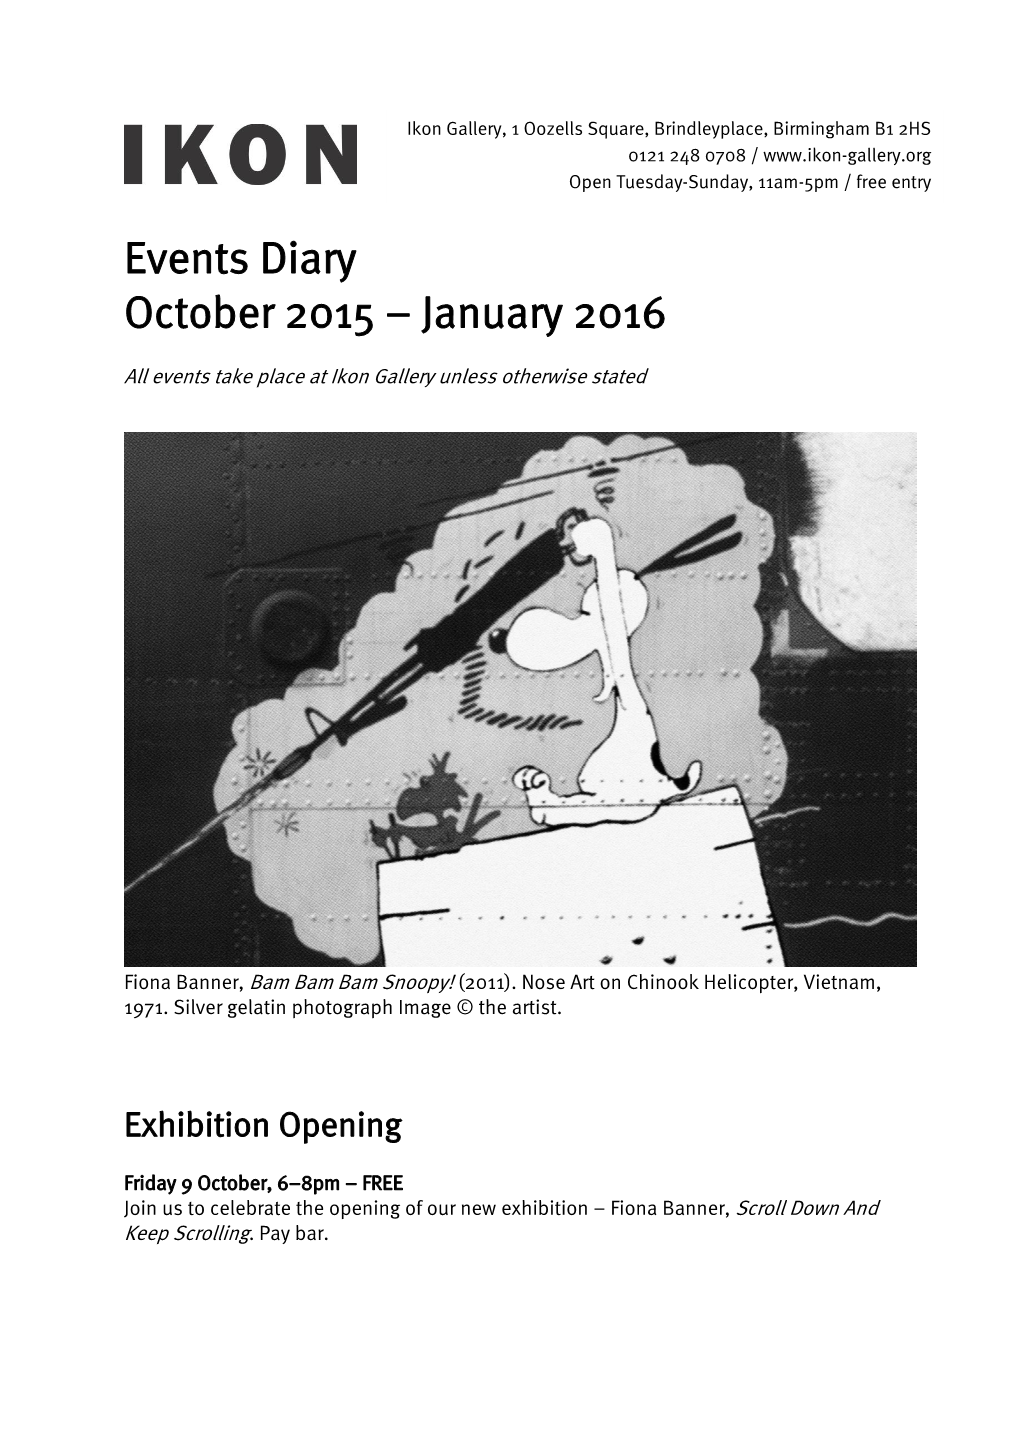 Events Diary October 2015 – January 2016